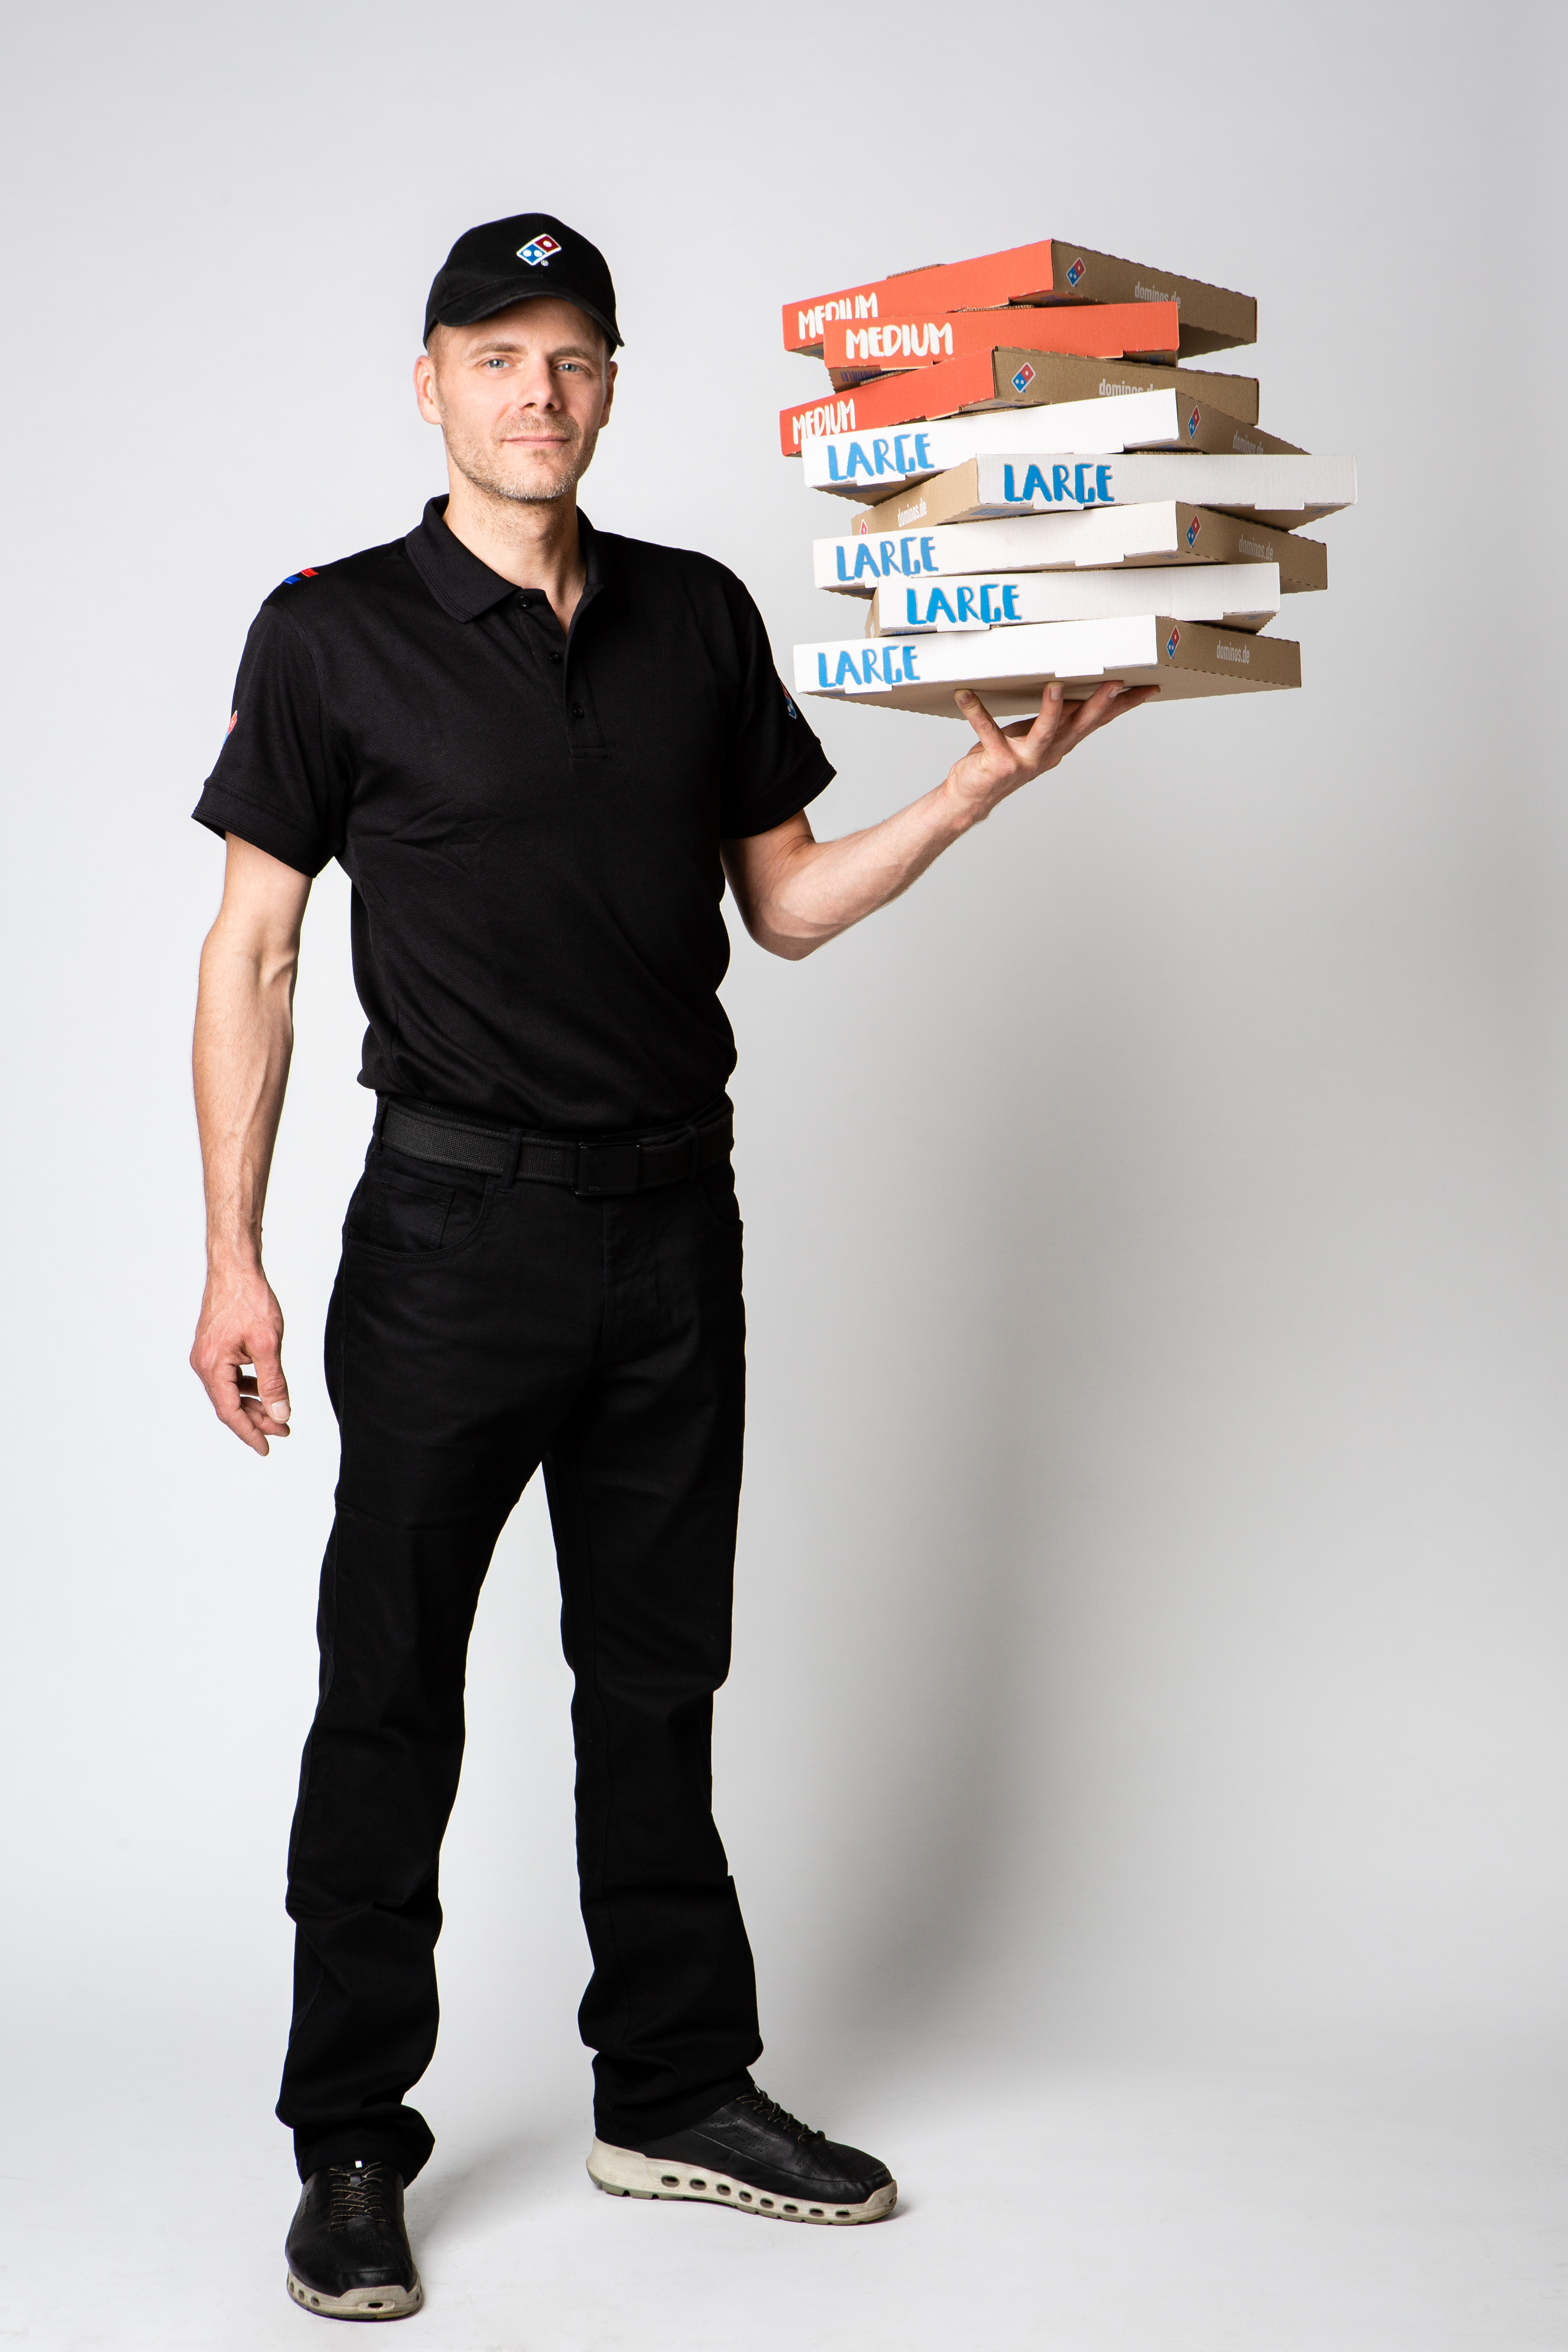 Pizzabäcker Pizzafahrer Delivery Driver Karriere